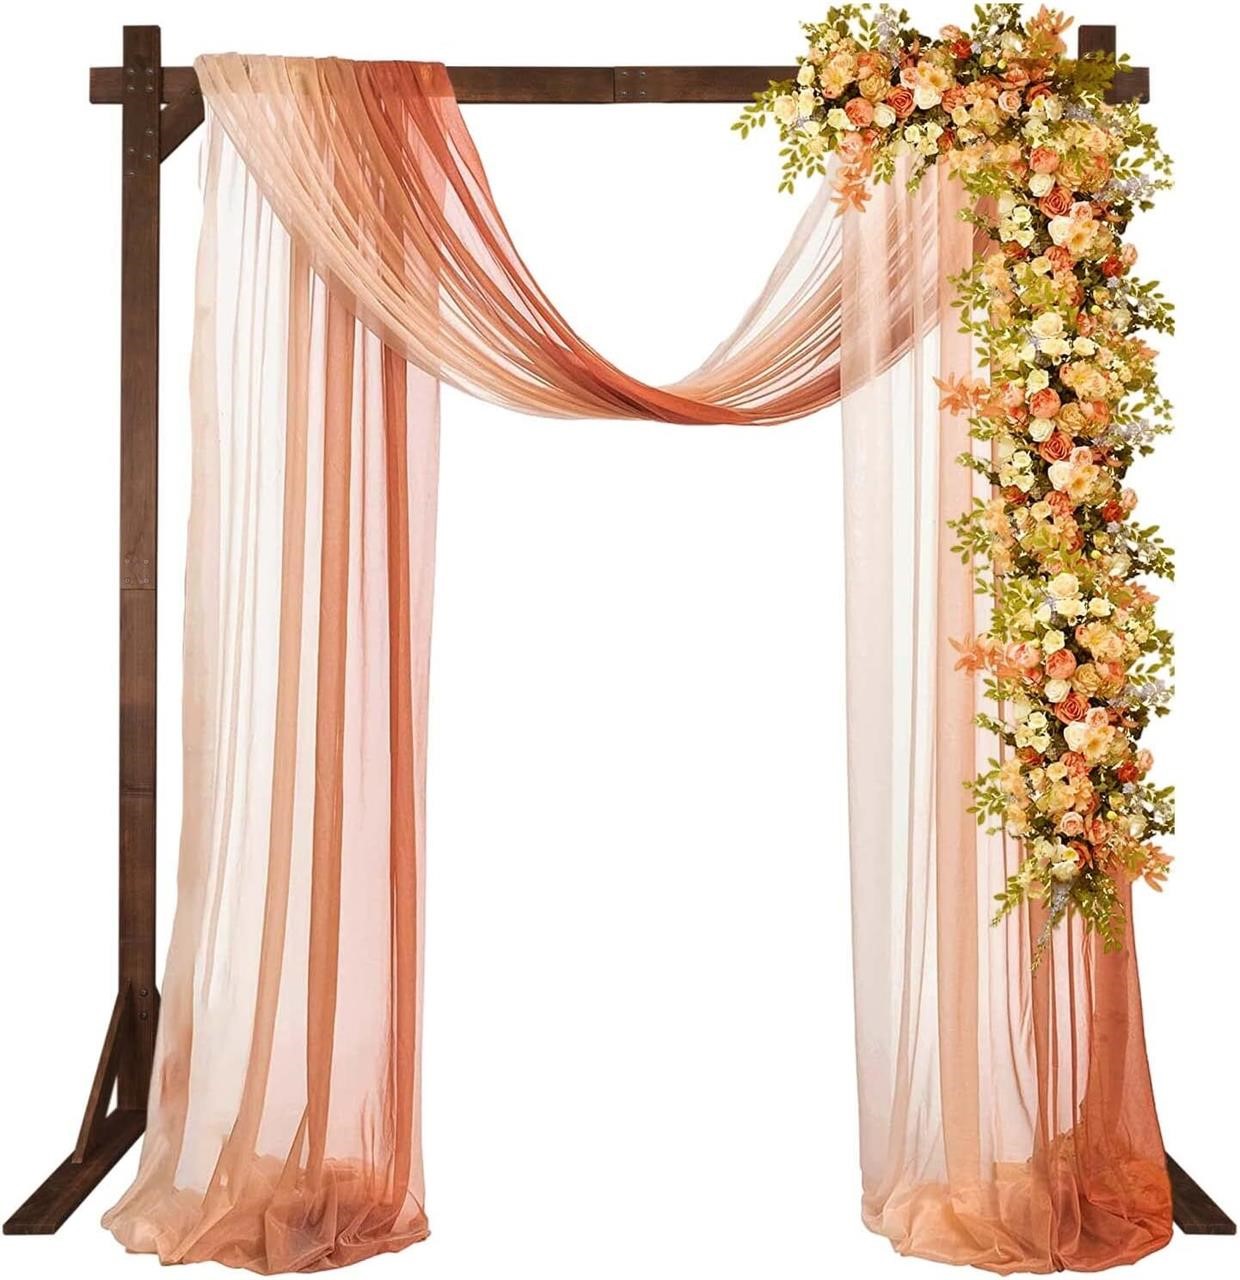 7.2FT Wooden Wedding Arch for Ceremonies